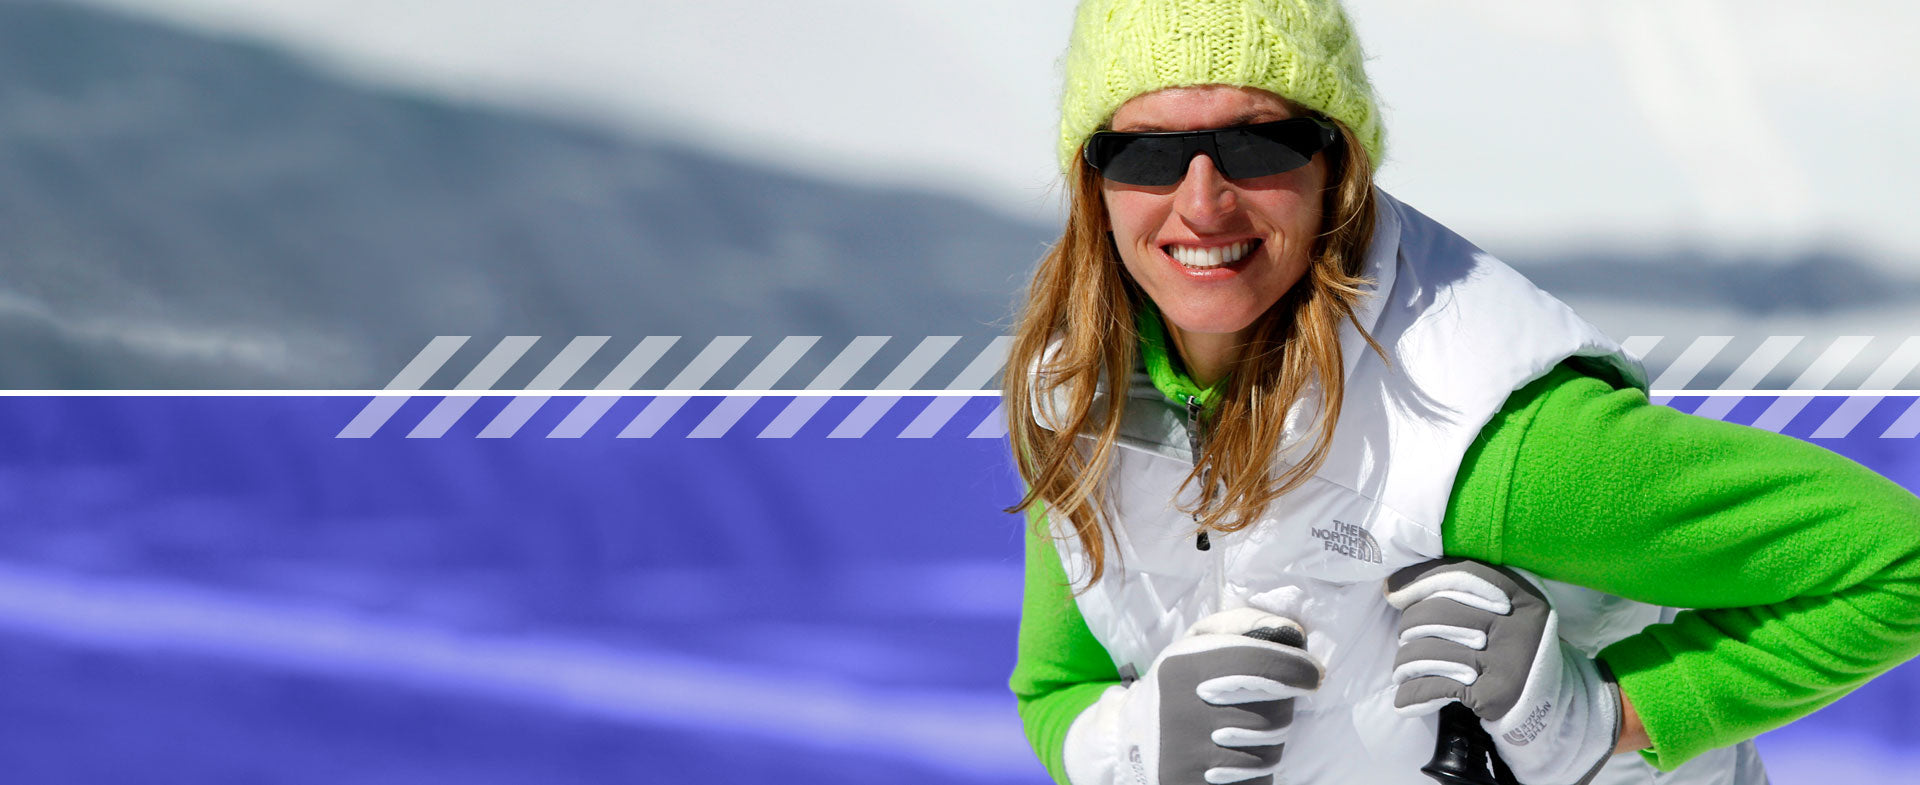 woman skiing wearing popticals sunglasses smiling at the camera 